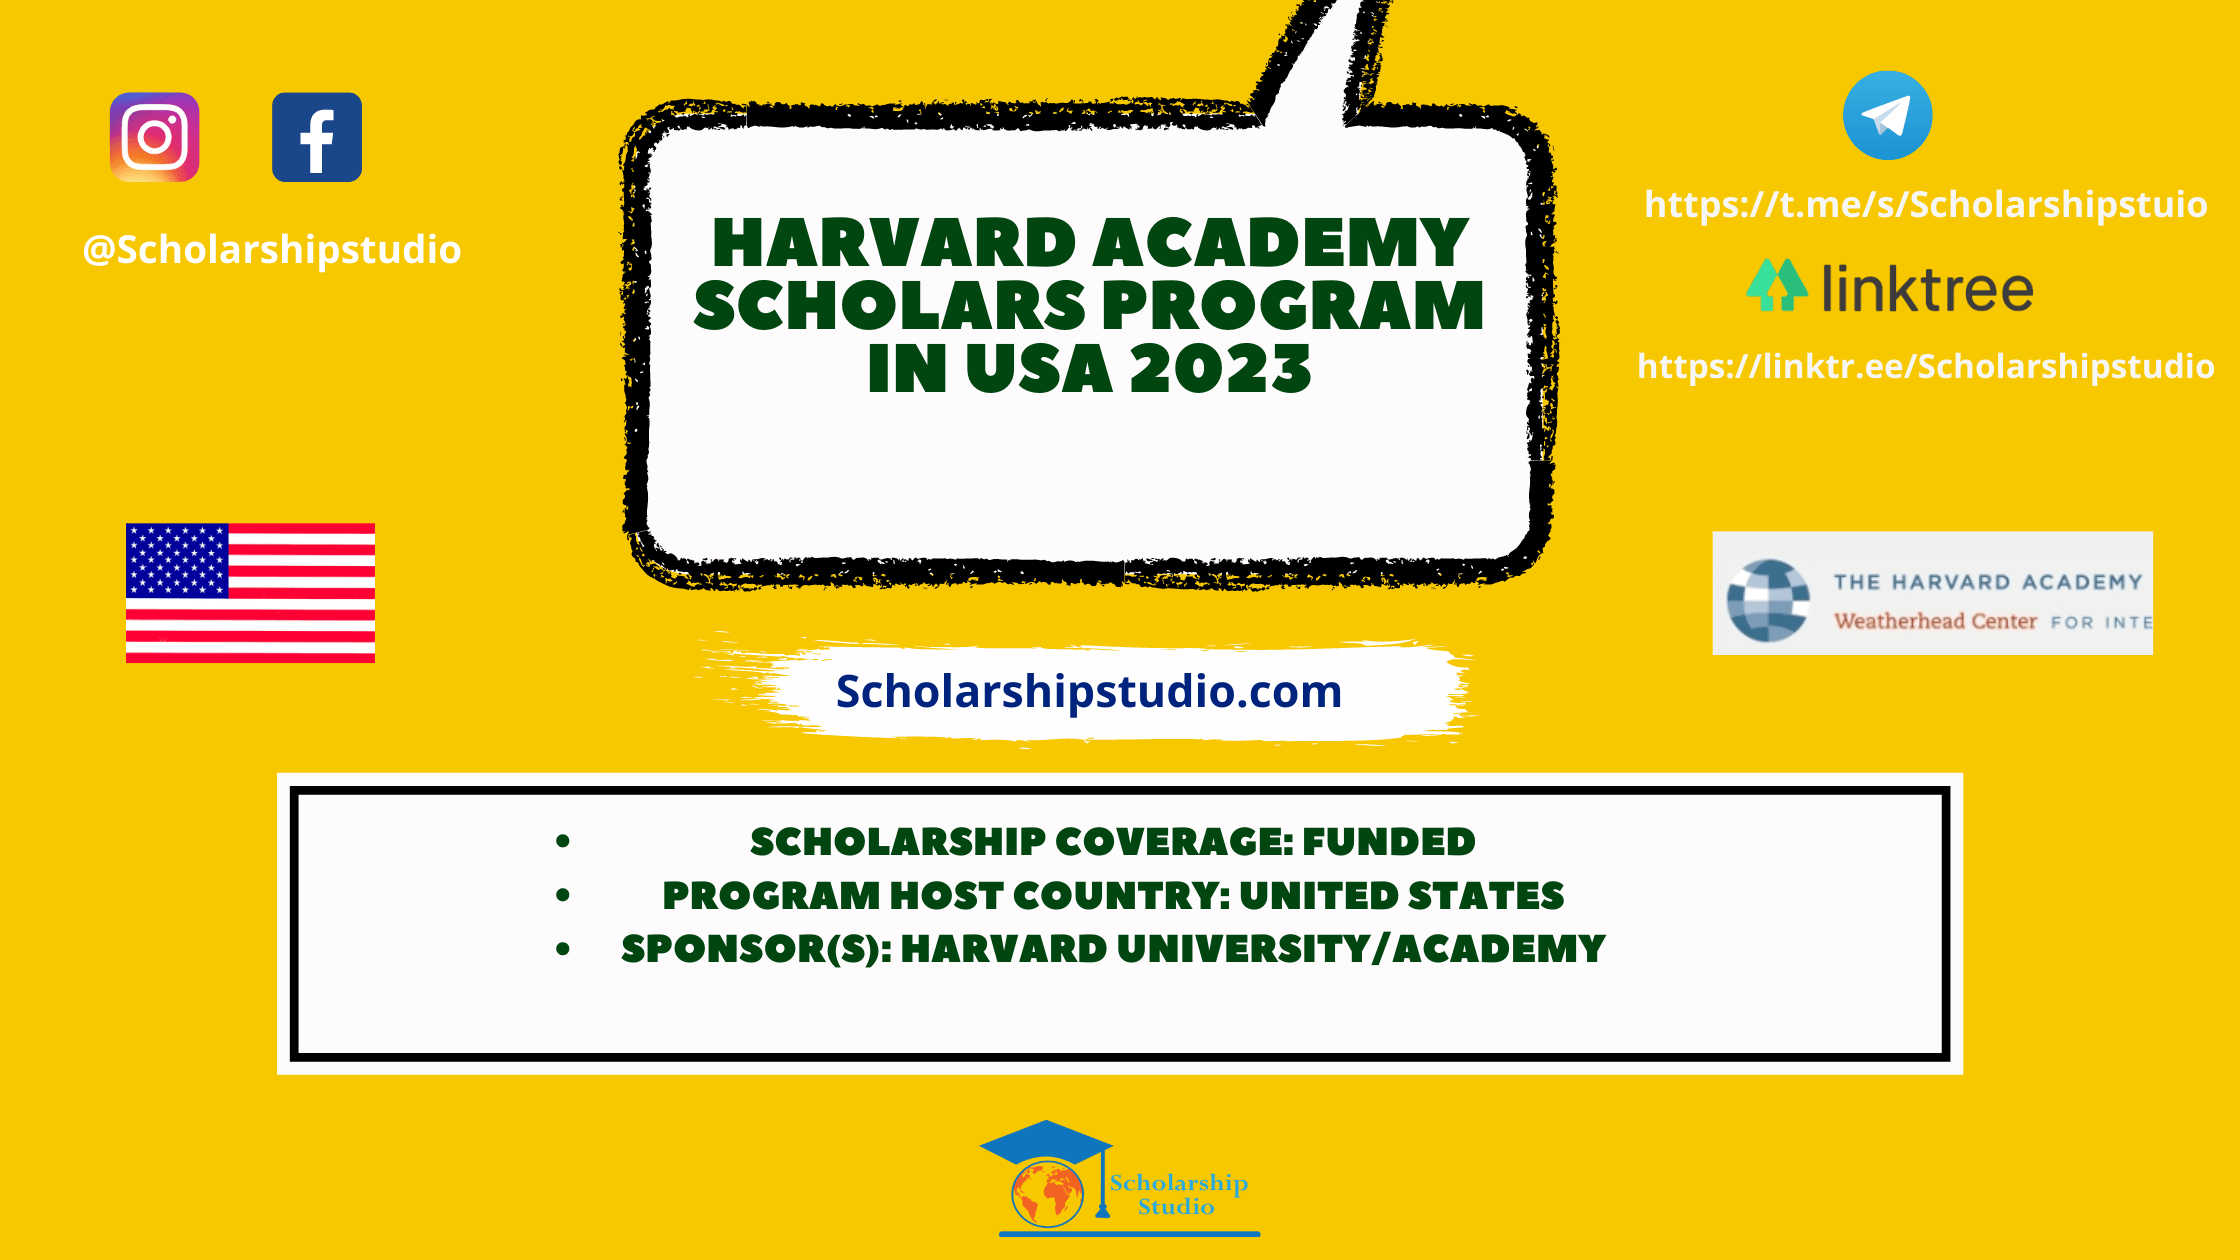 Harvard Academy Scholars Program in USA 2023 - Scholarship studio